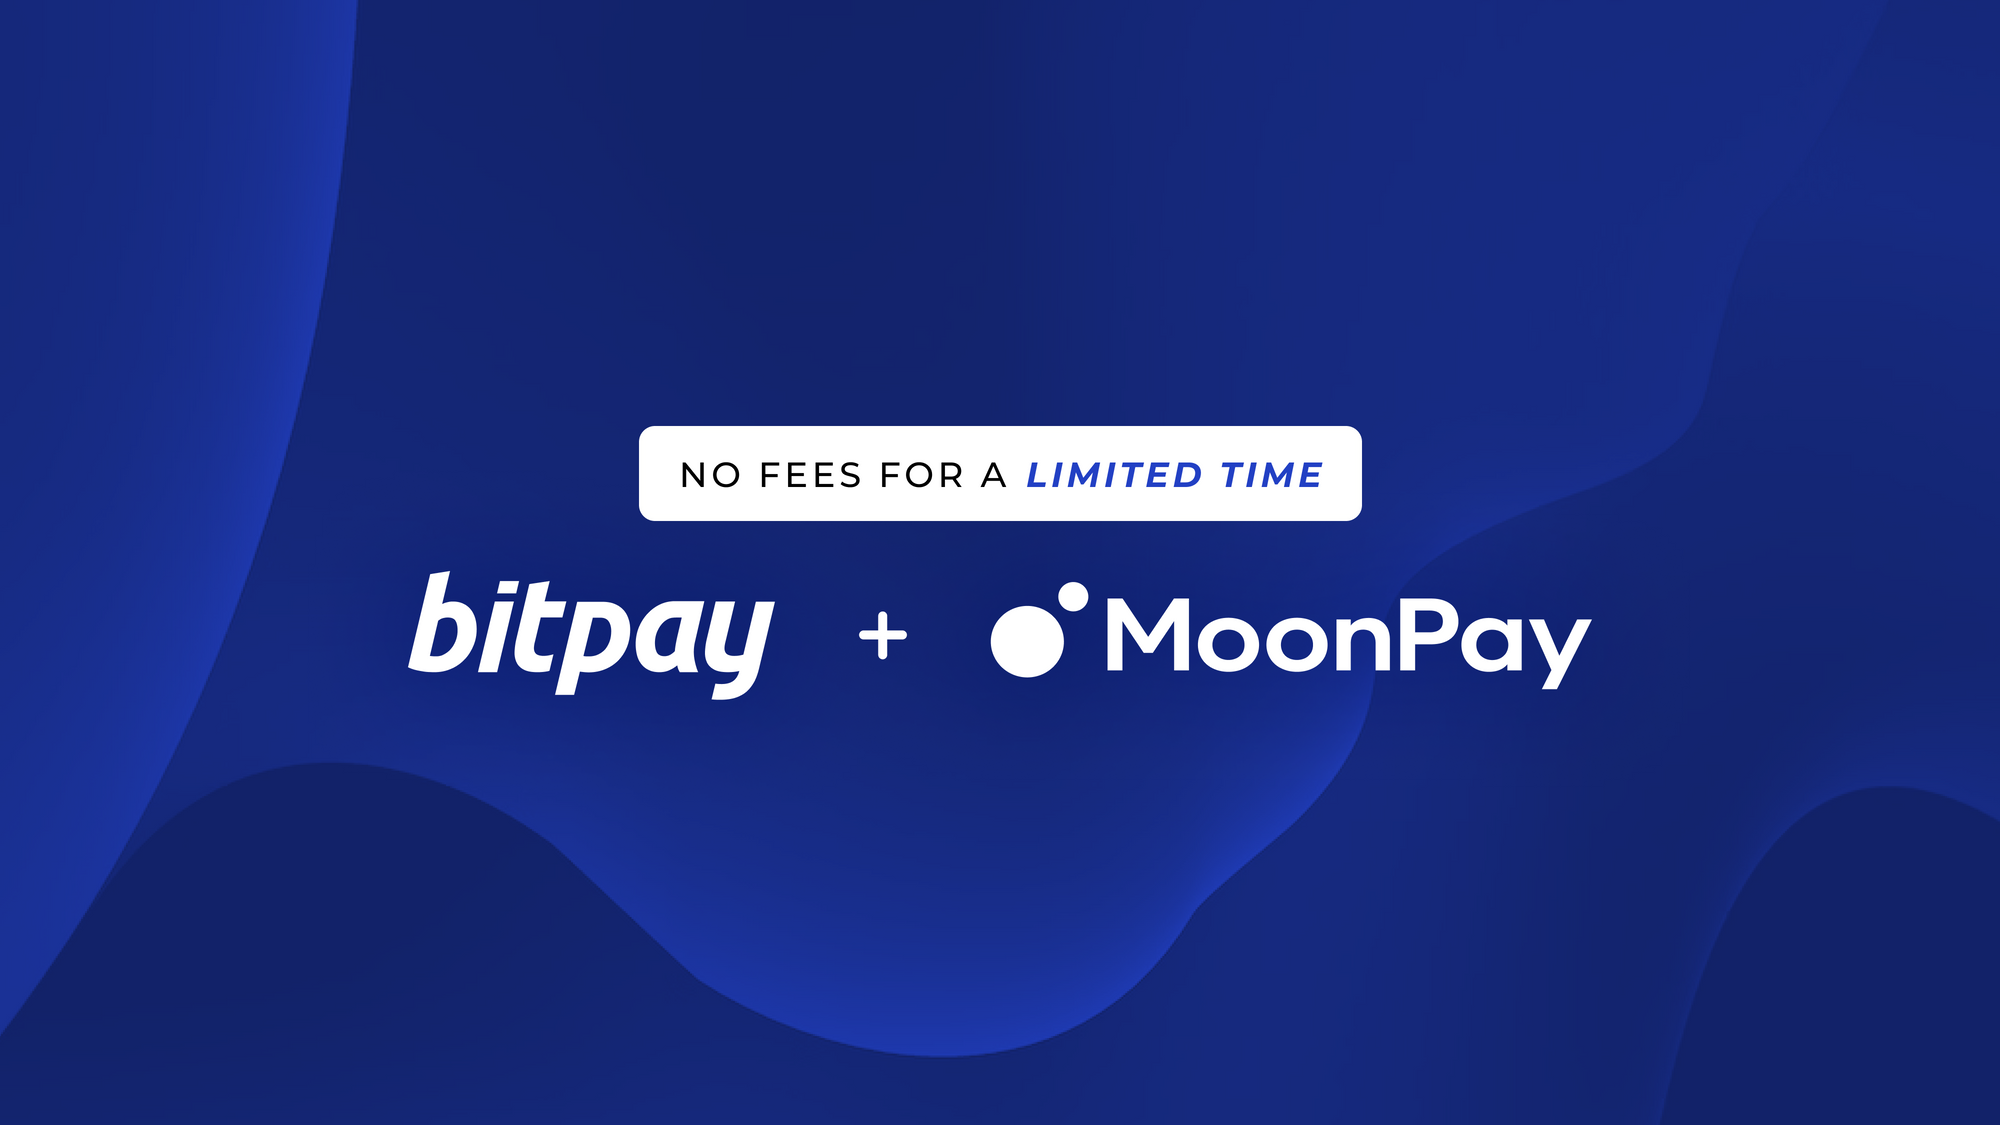 BitPay משתפת פעולה עם MoonPay - קנה קריפטו ללא עמלות לזמן מוגבל